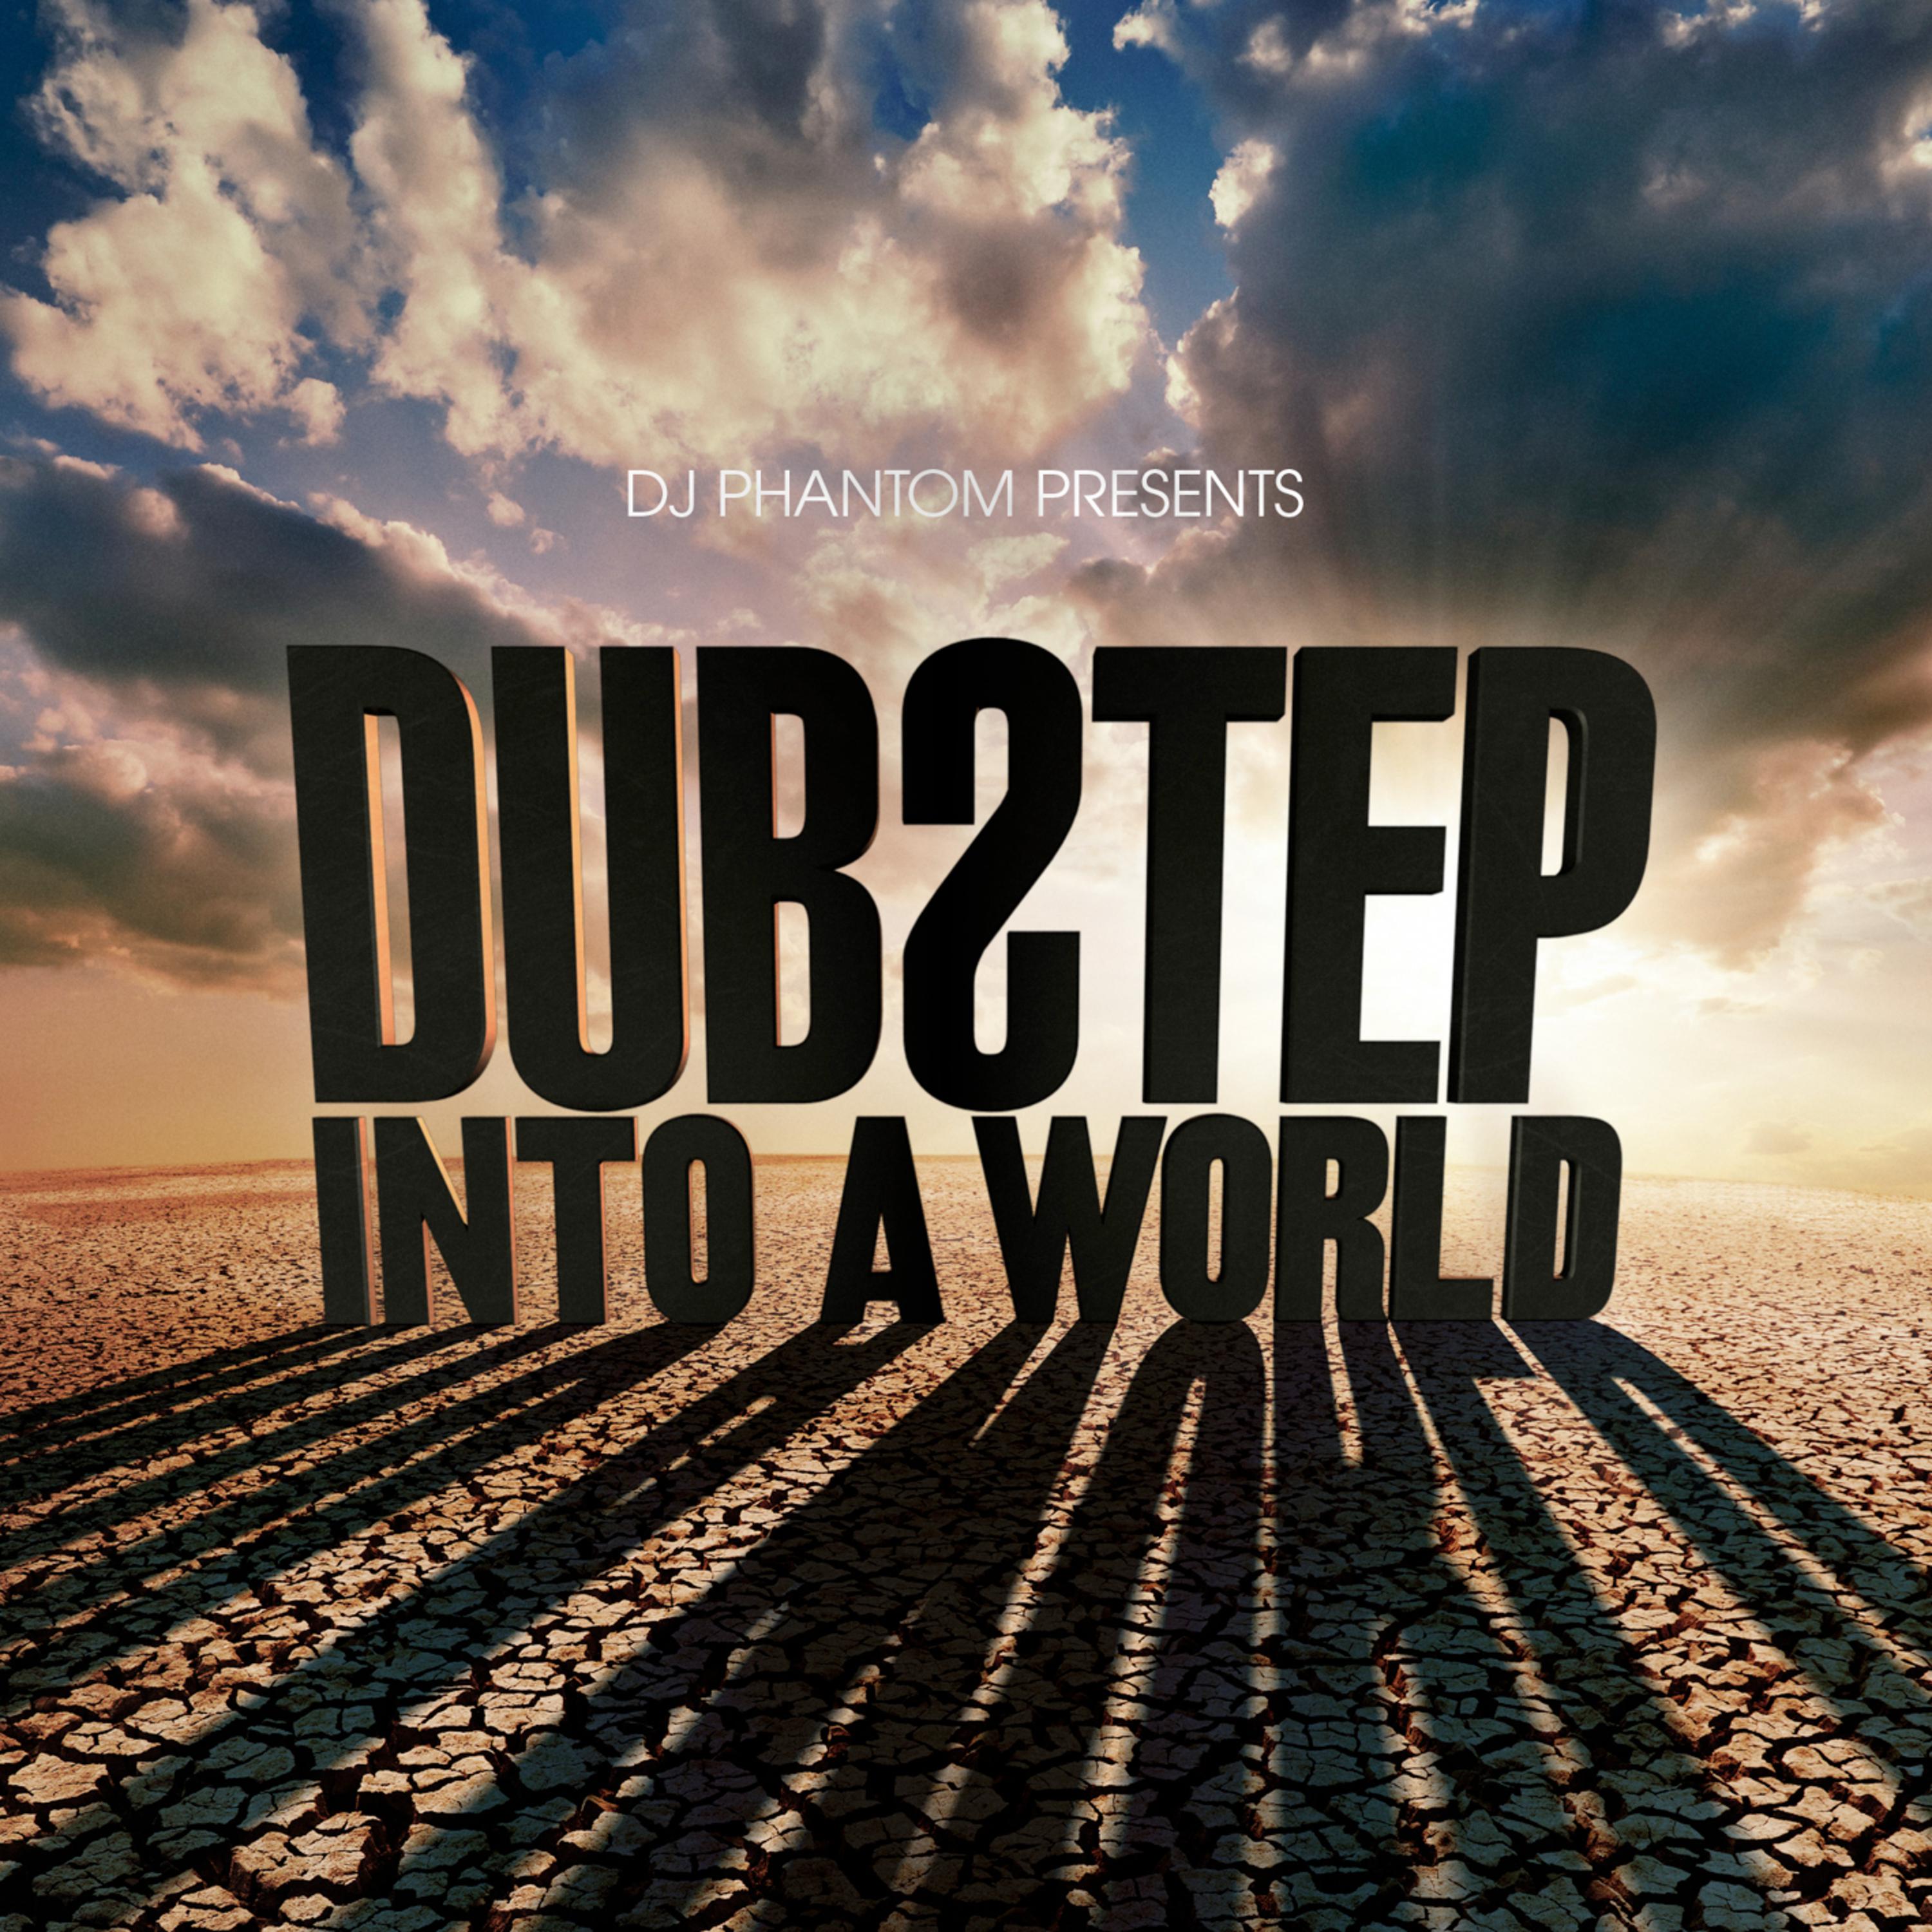 DJ Phantom presents Dubstep Into a World